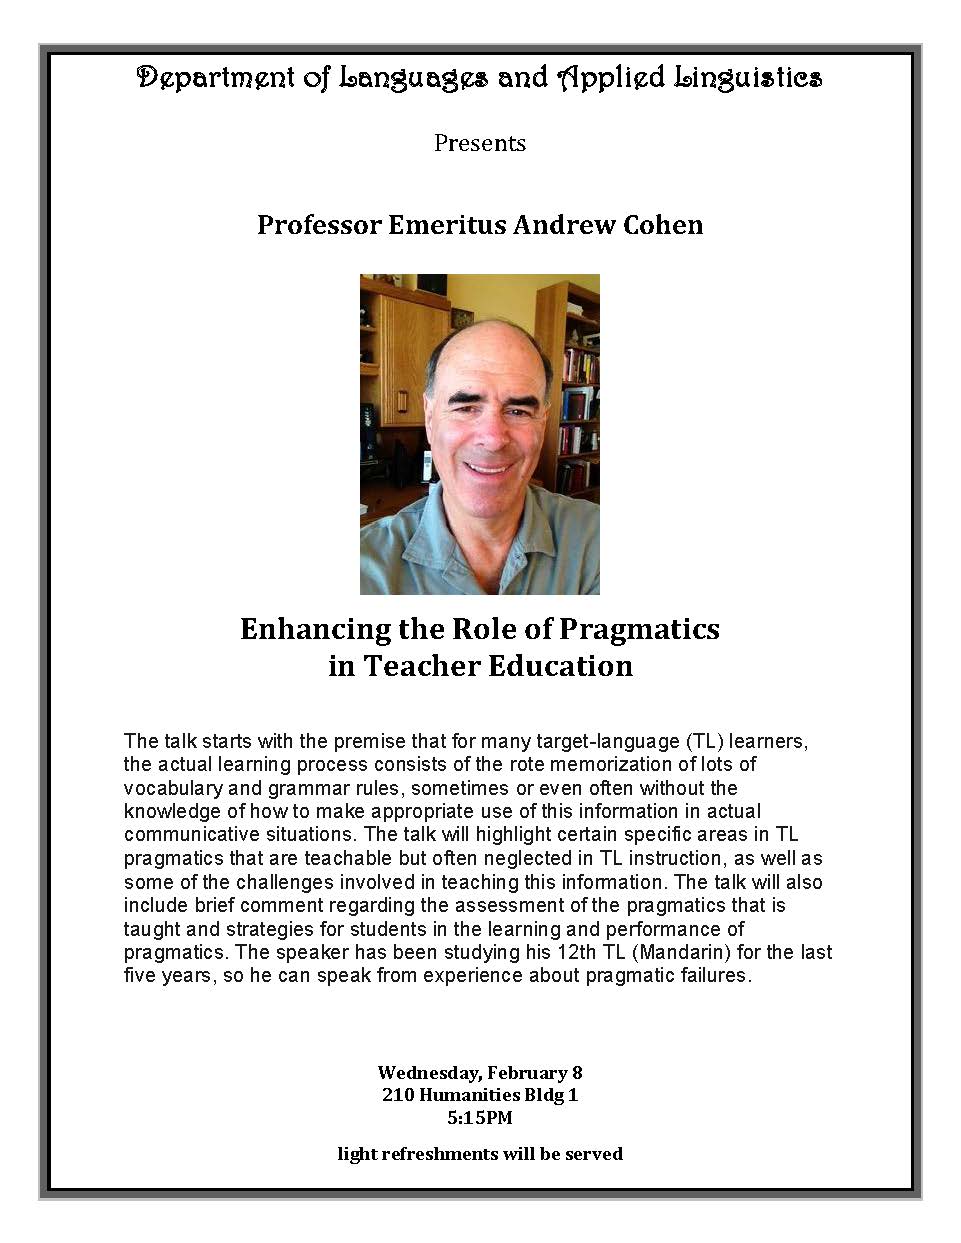 Enhancing the Role of Pragmatics in Teacher Education flyer